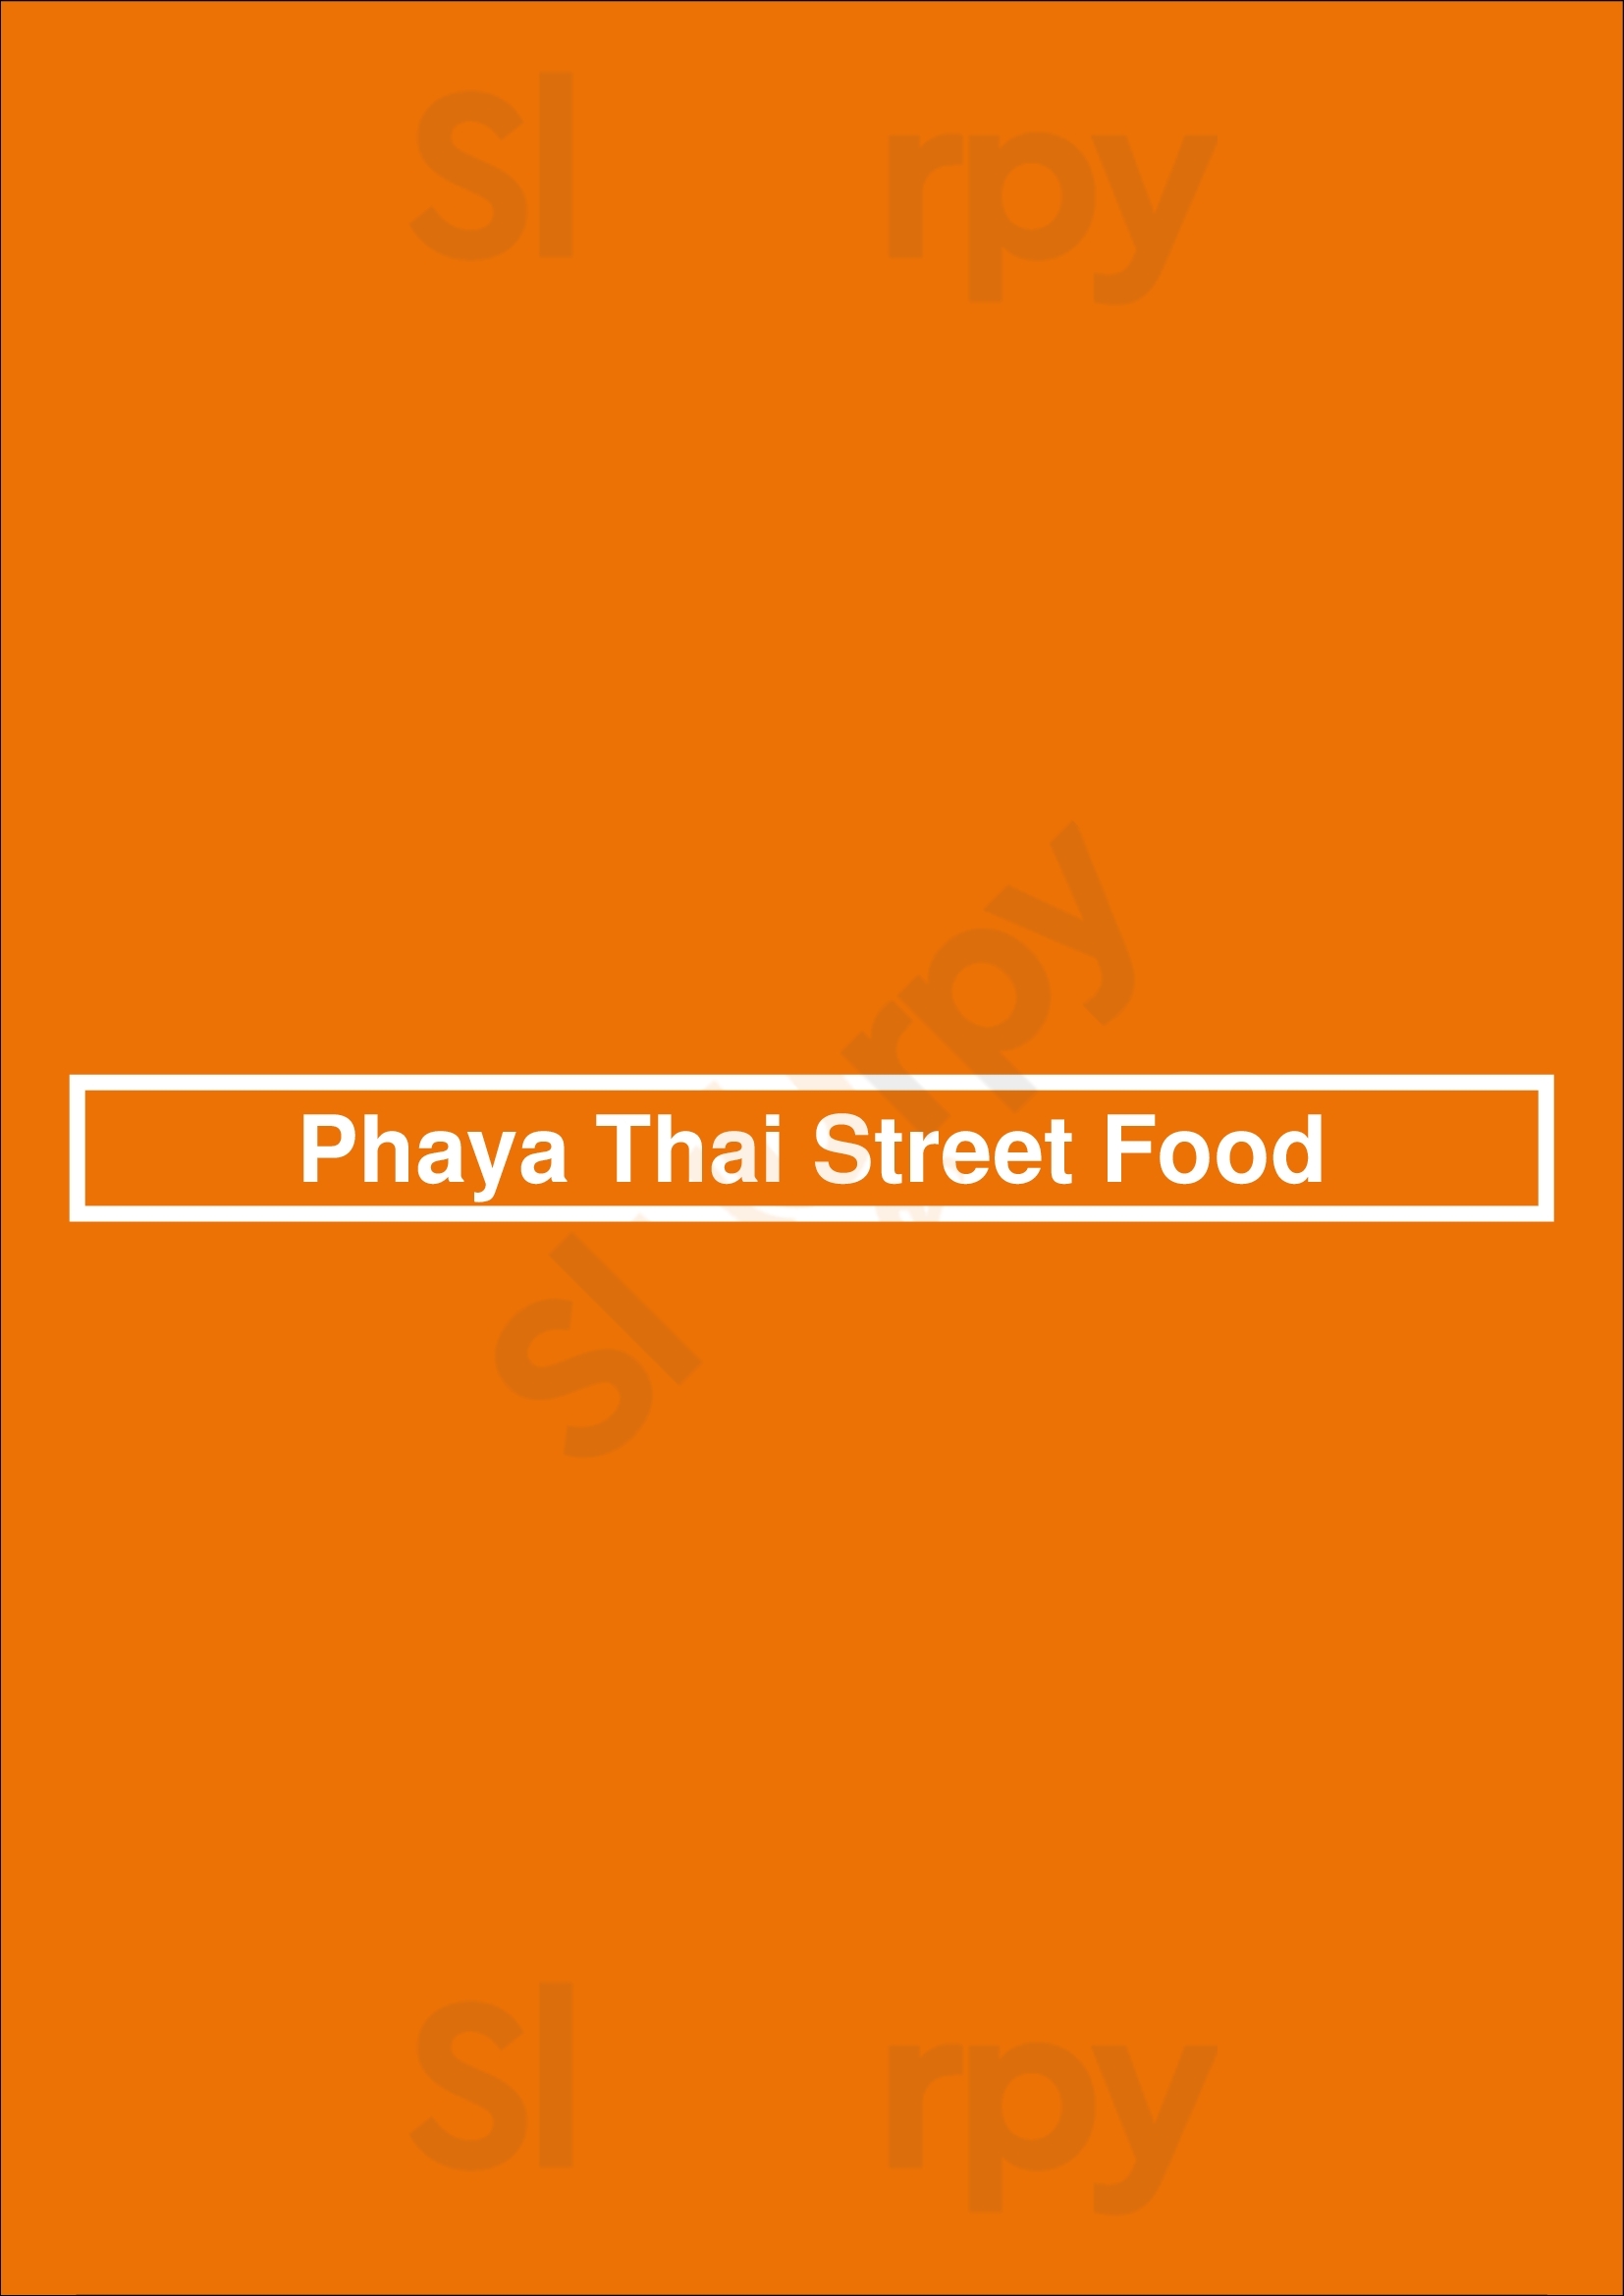 Phaya Thai Street Food Indianapolis Menu - 1